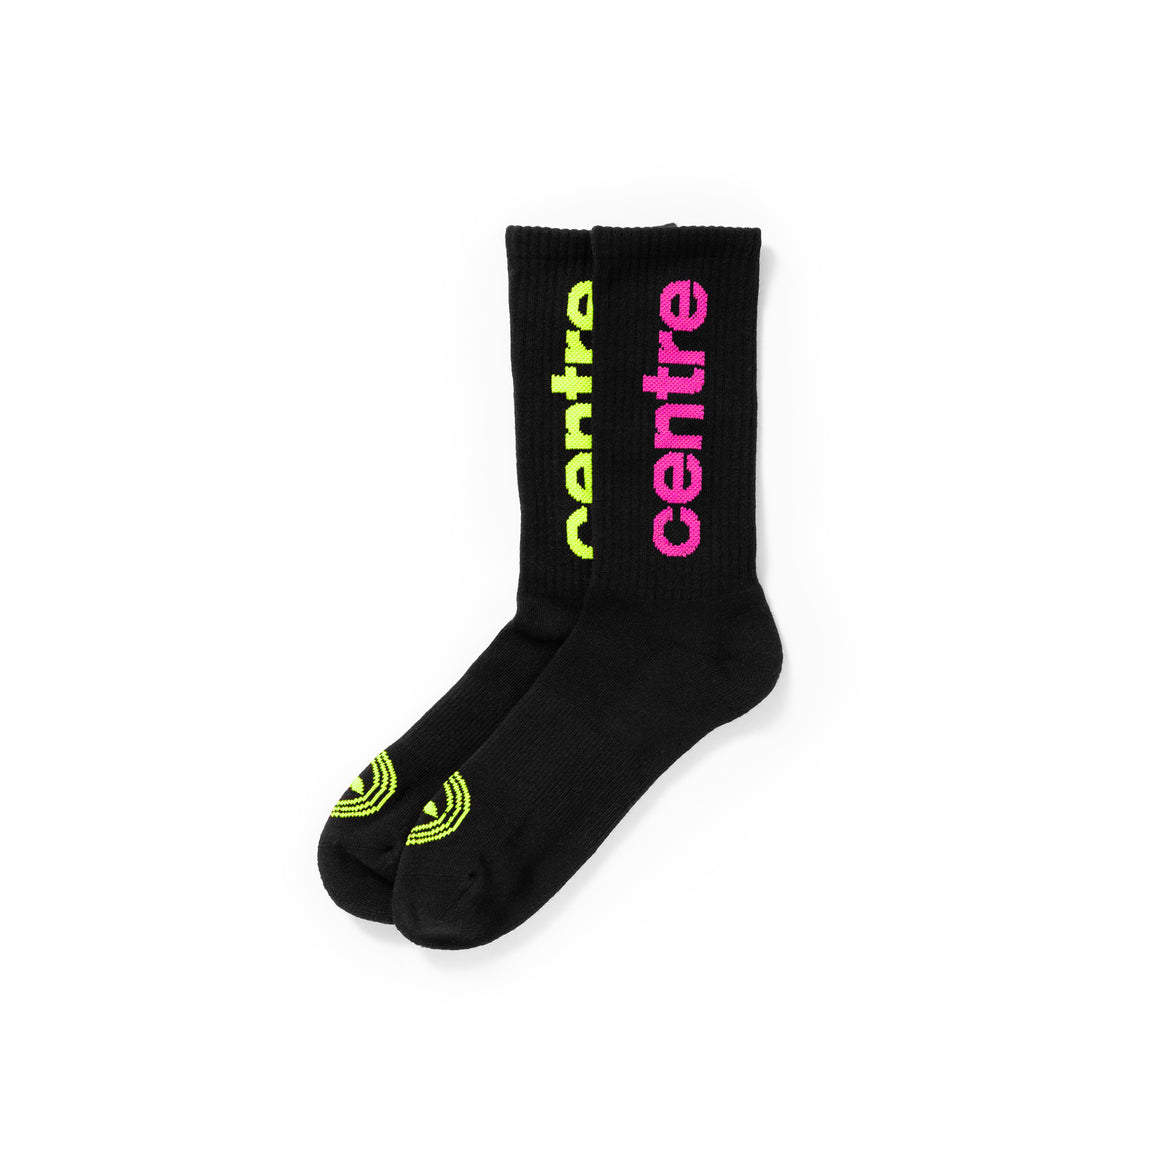 Centre Premium Casual Crew Socks (Black/Neon) - Centre Premium Casual Crew Socks (Black/Neon) - 